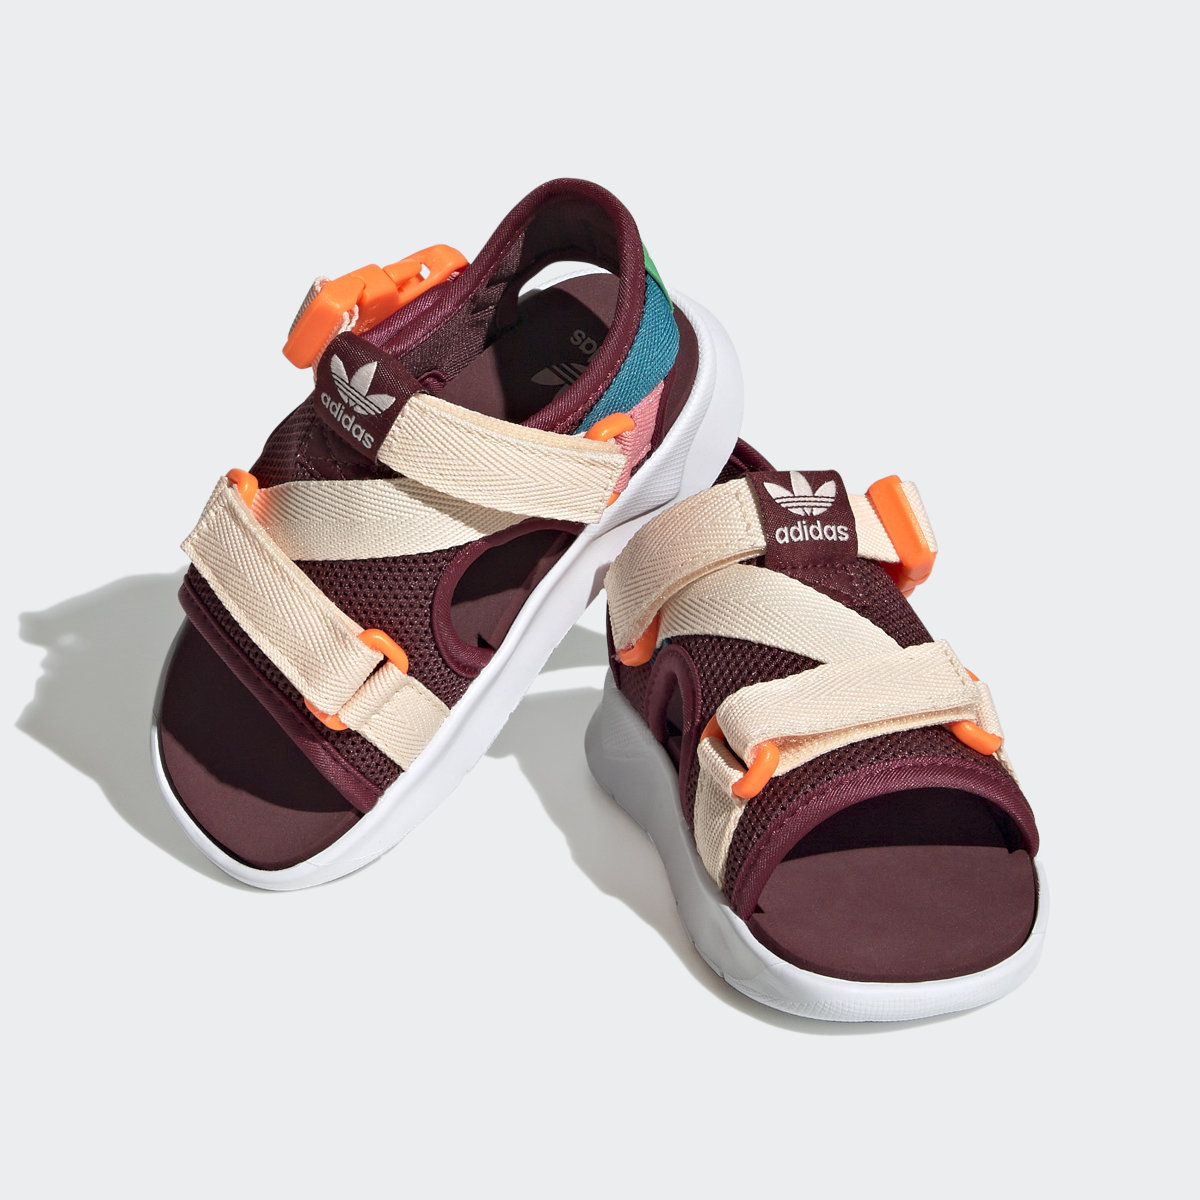 Adidas 360 3.0 Sandals. 5